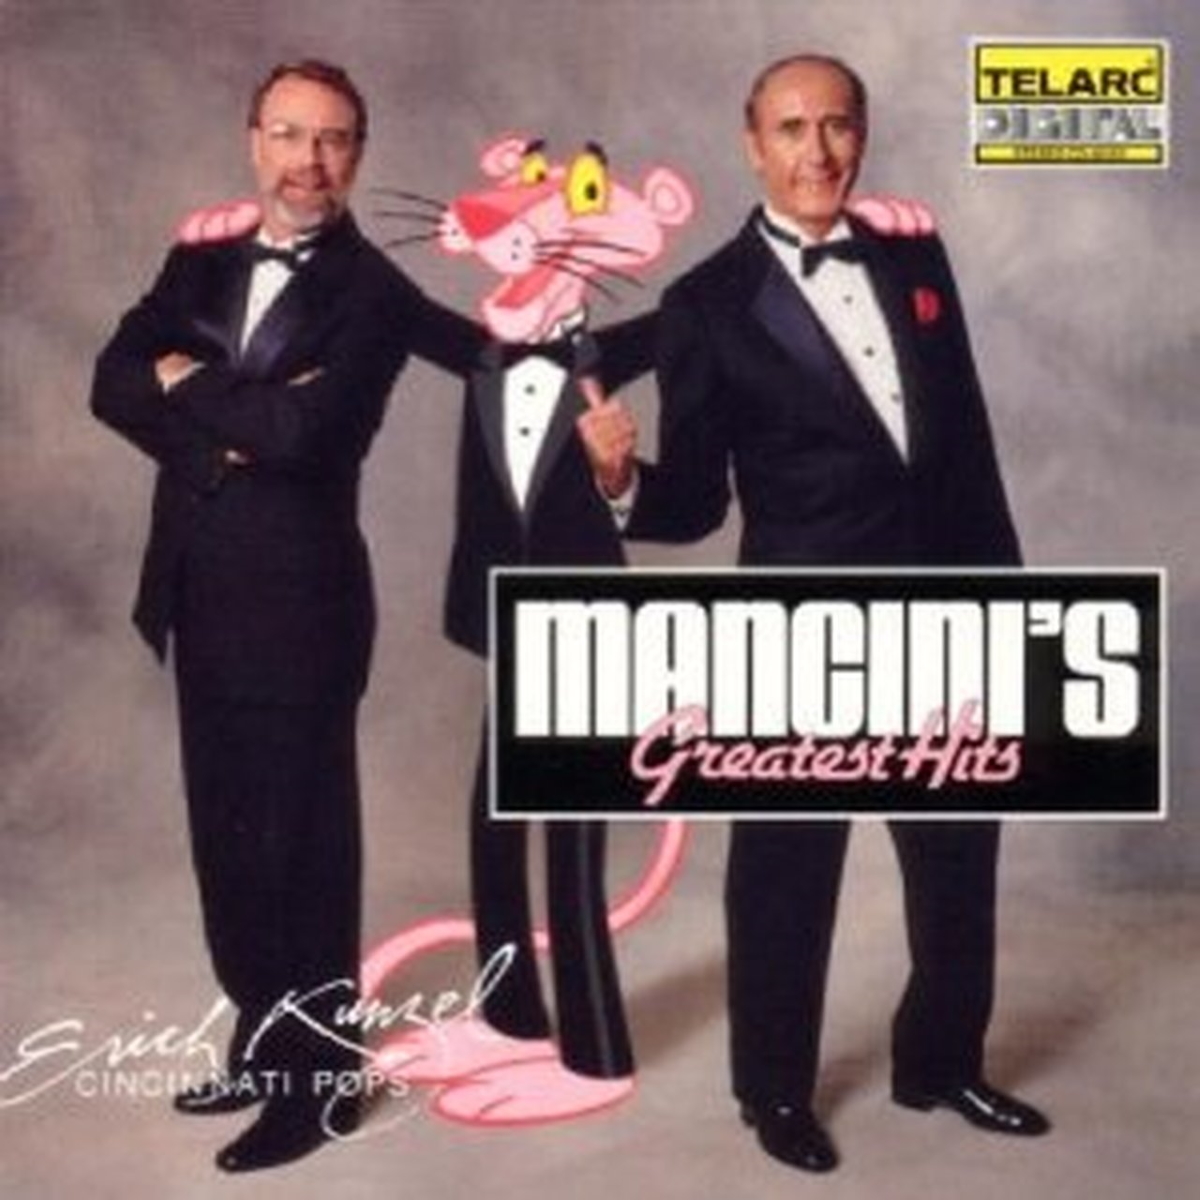 Cincinnati Pops Orchestra - Mancini's Greatest Hits